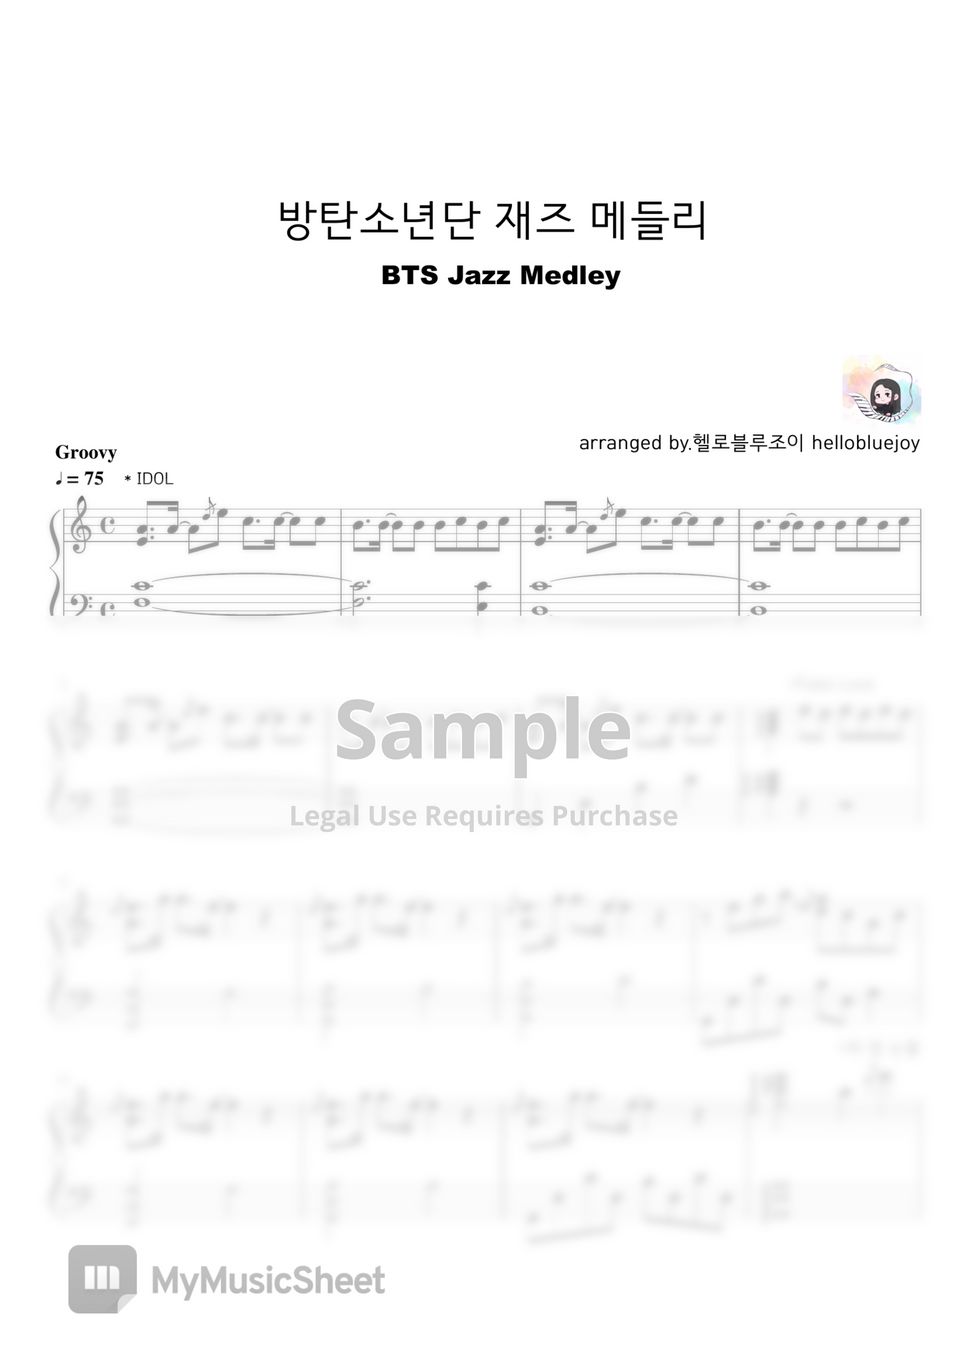 BTS - BTS Jazz Medley (5 songs) by 헬로블루조이